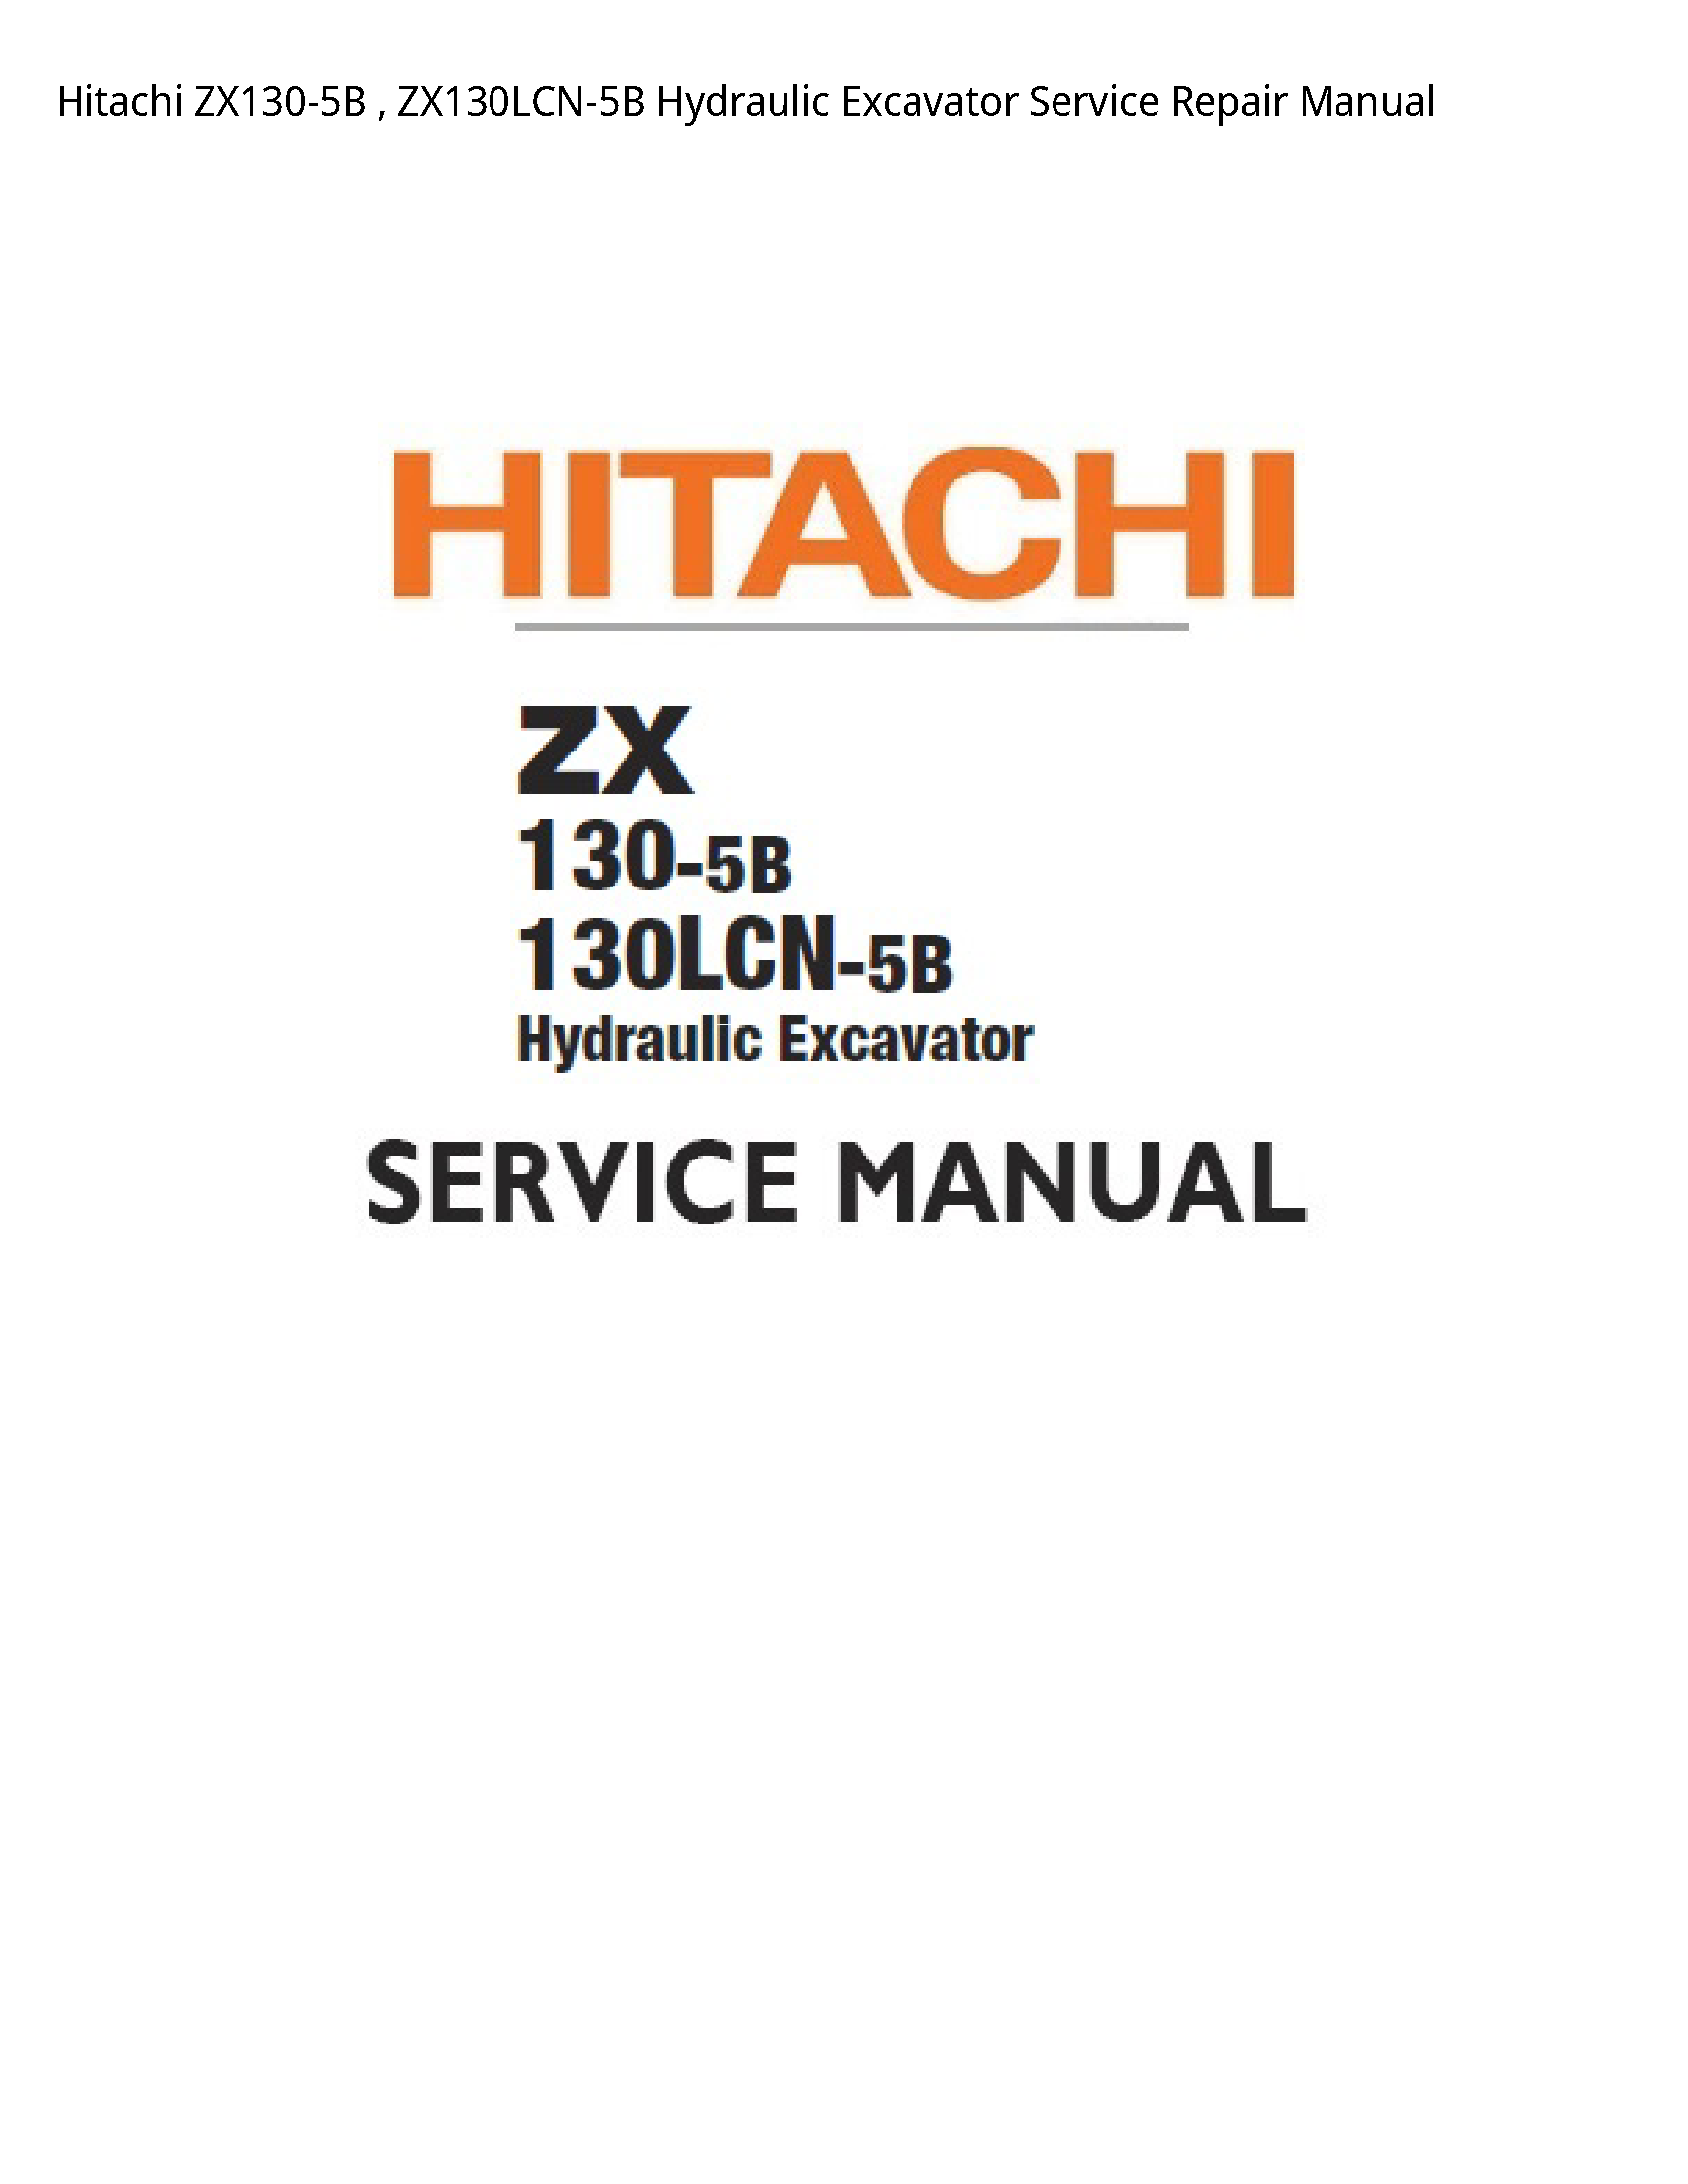 Hitachi ZX130-5B Hydraulic Excavator manual